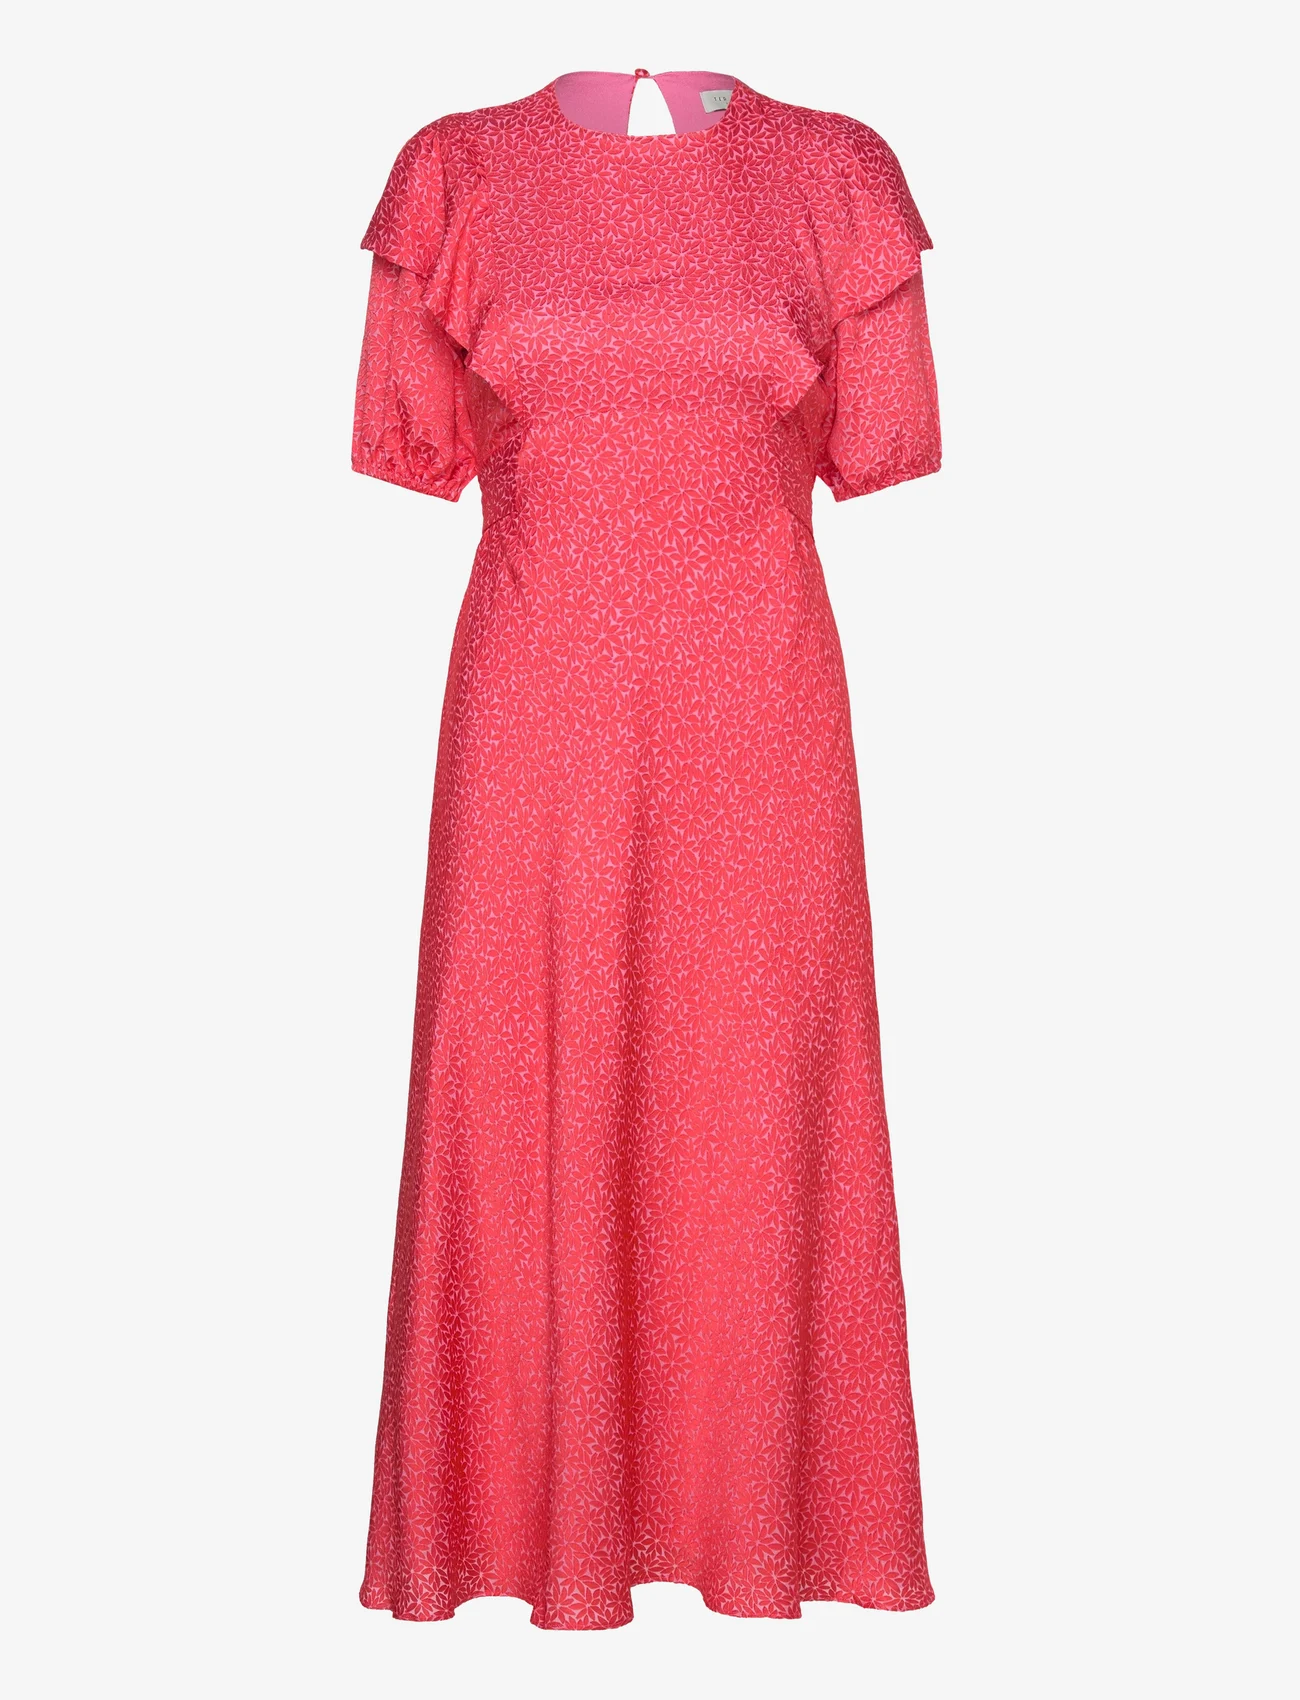 Ted Baker London - MAYYIA - summer dresses - 55 fuchsia - 0